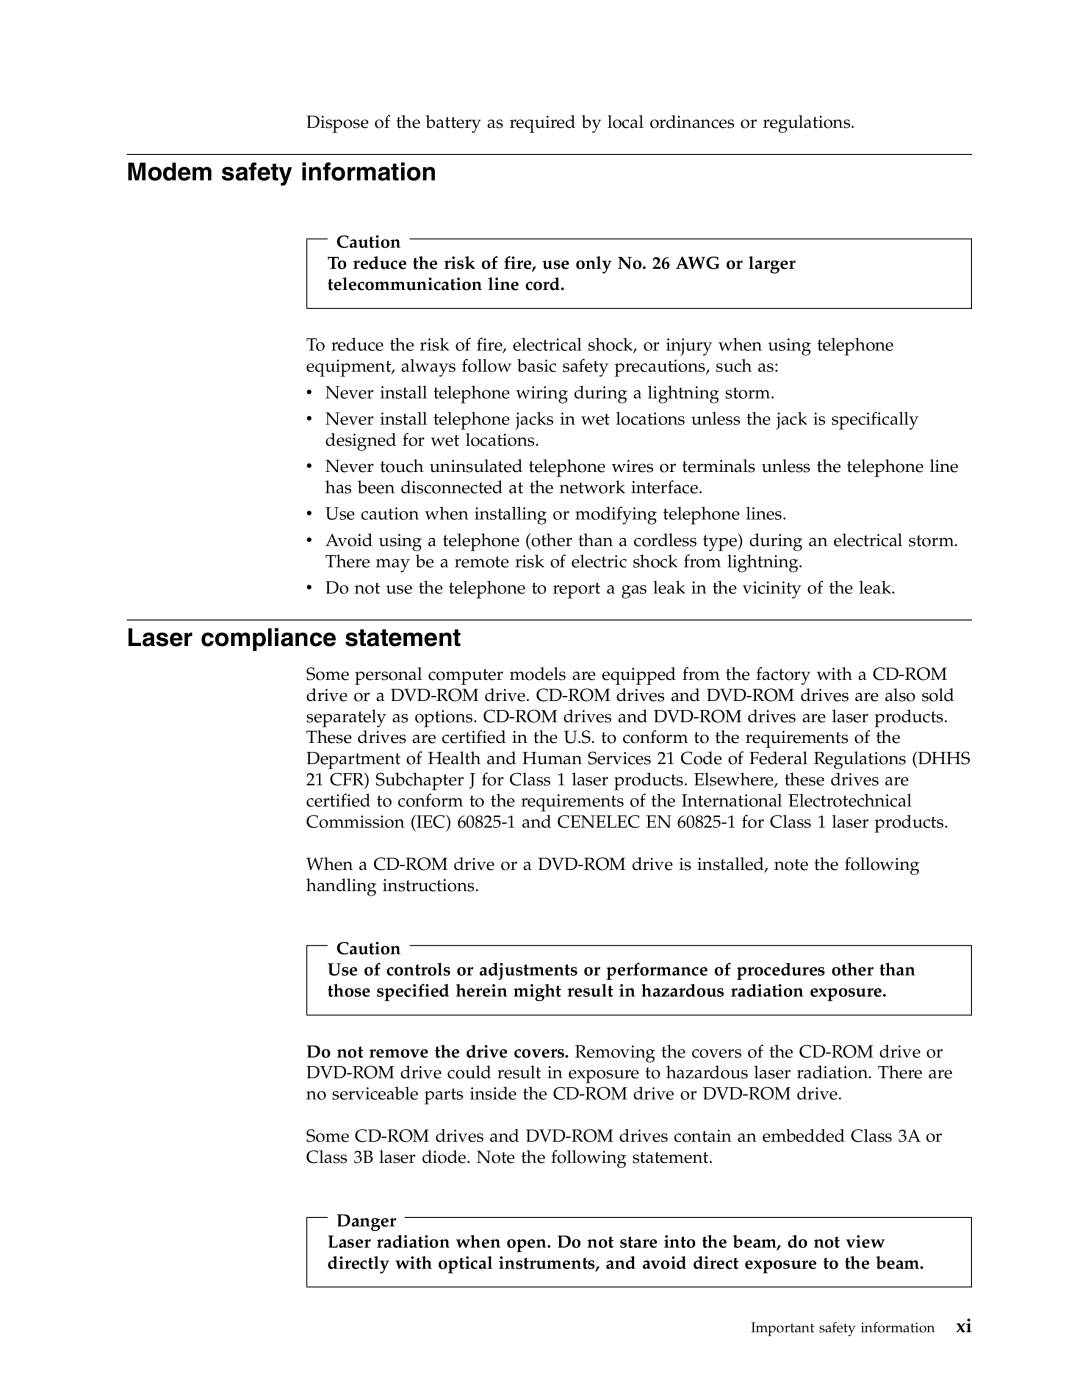 Lenovo 8011, 8814, 8810, 8801, 8793, 8805, 8797 manual Modem safety information, Laser compliance statement 